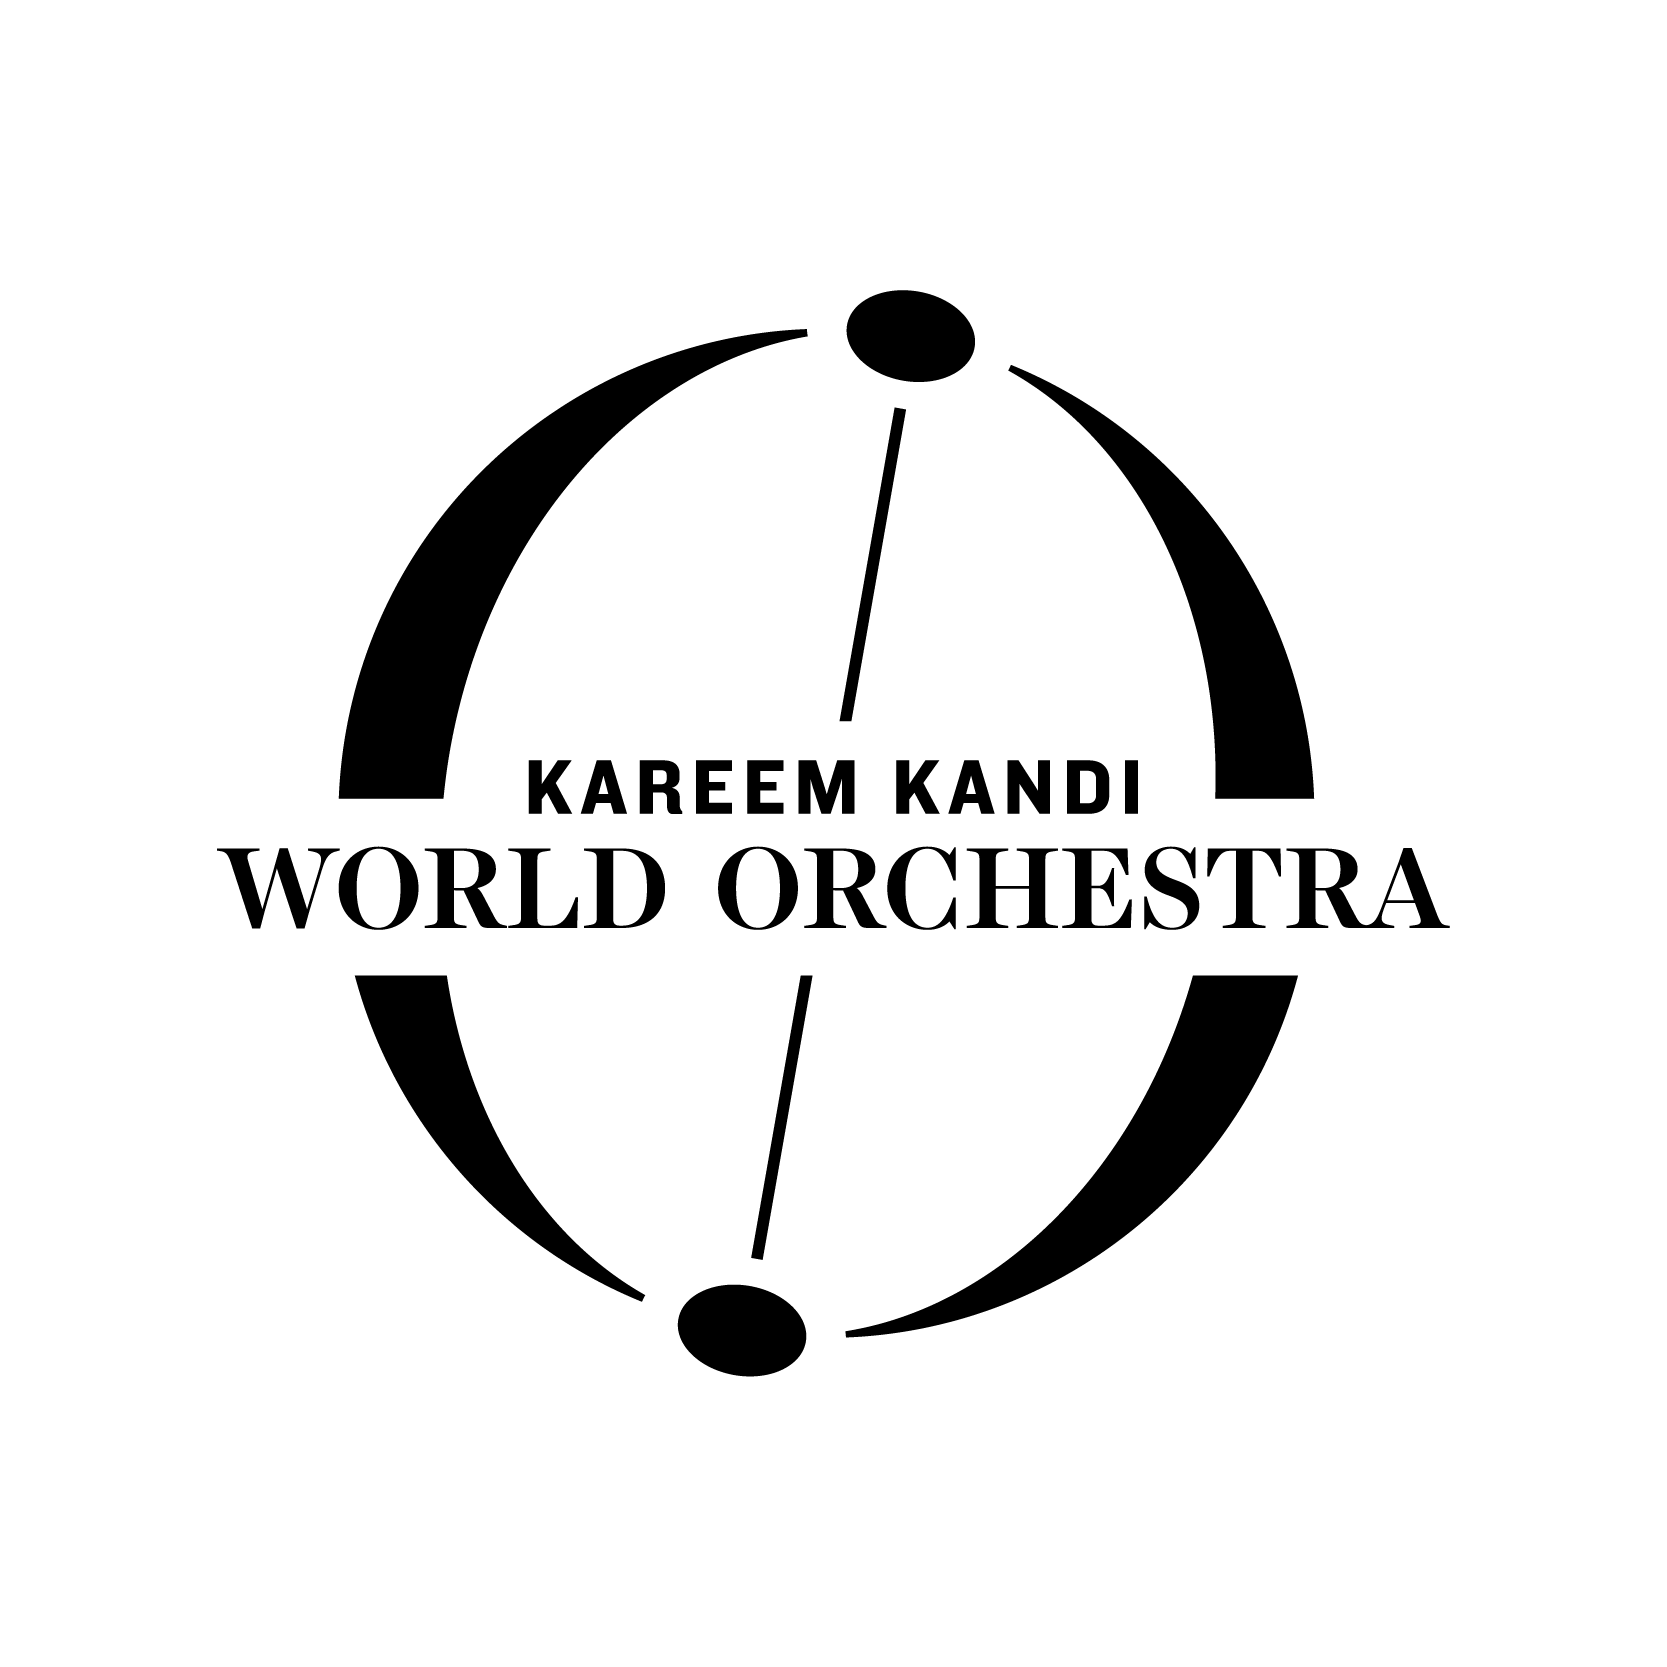 Kareem Kandi World Orchestra logo